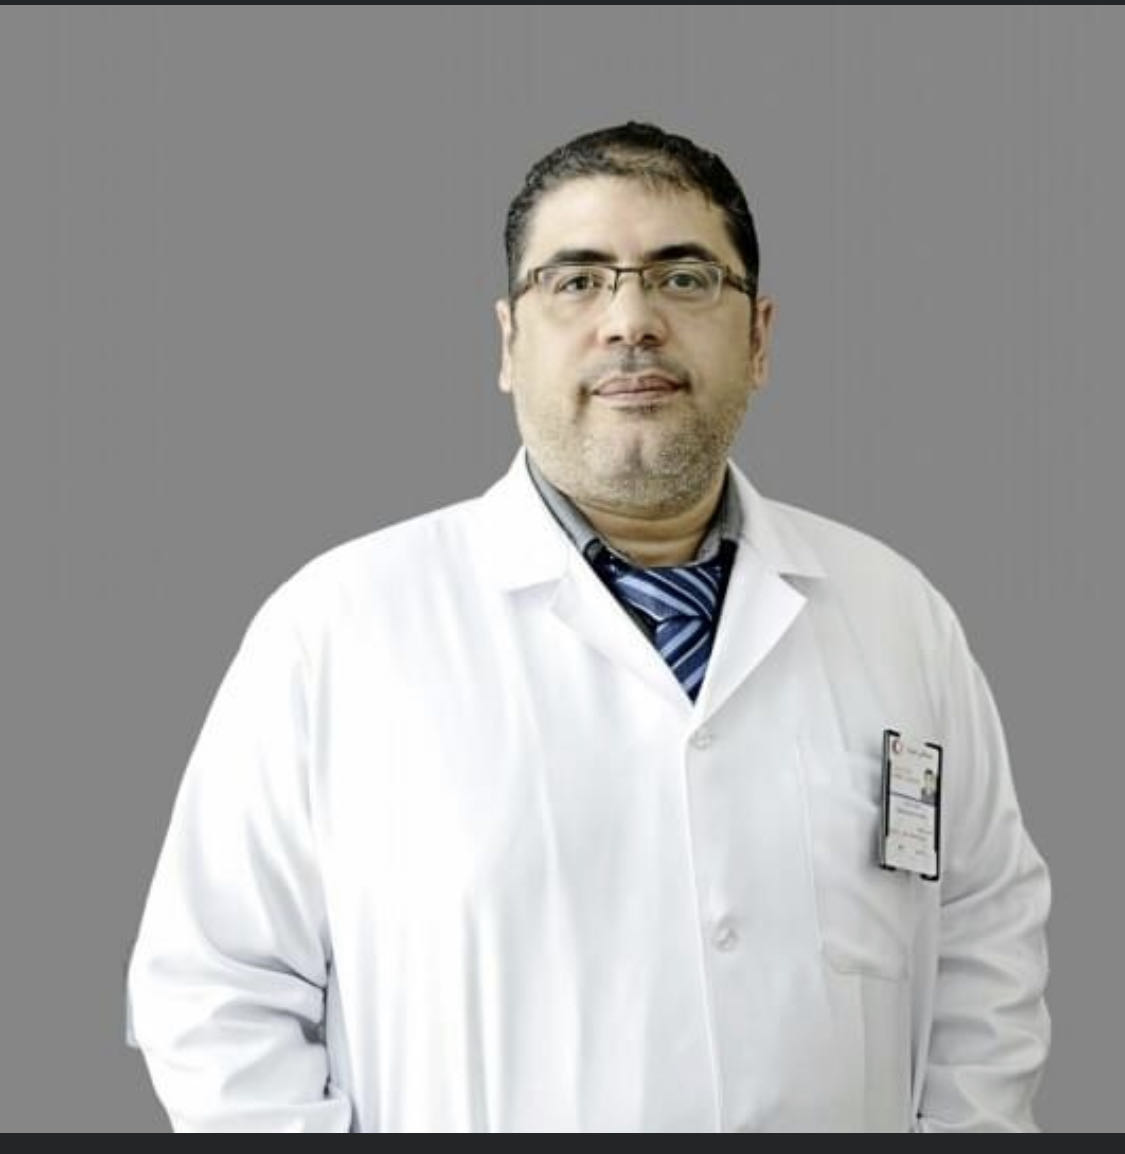 Dr. Mohammed Sedky Mohamed Yousef